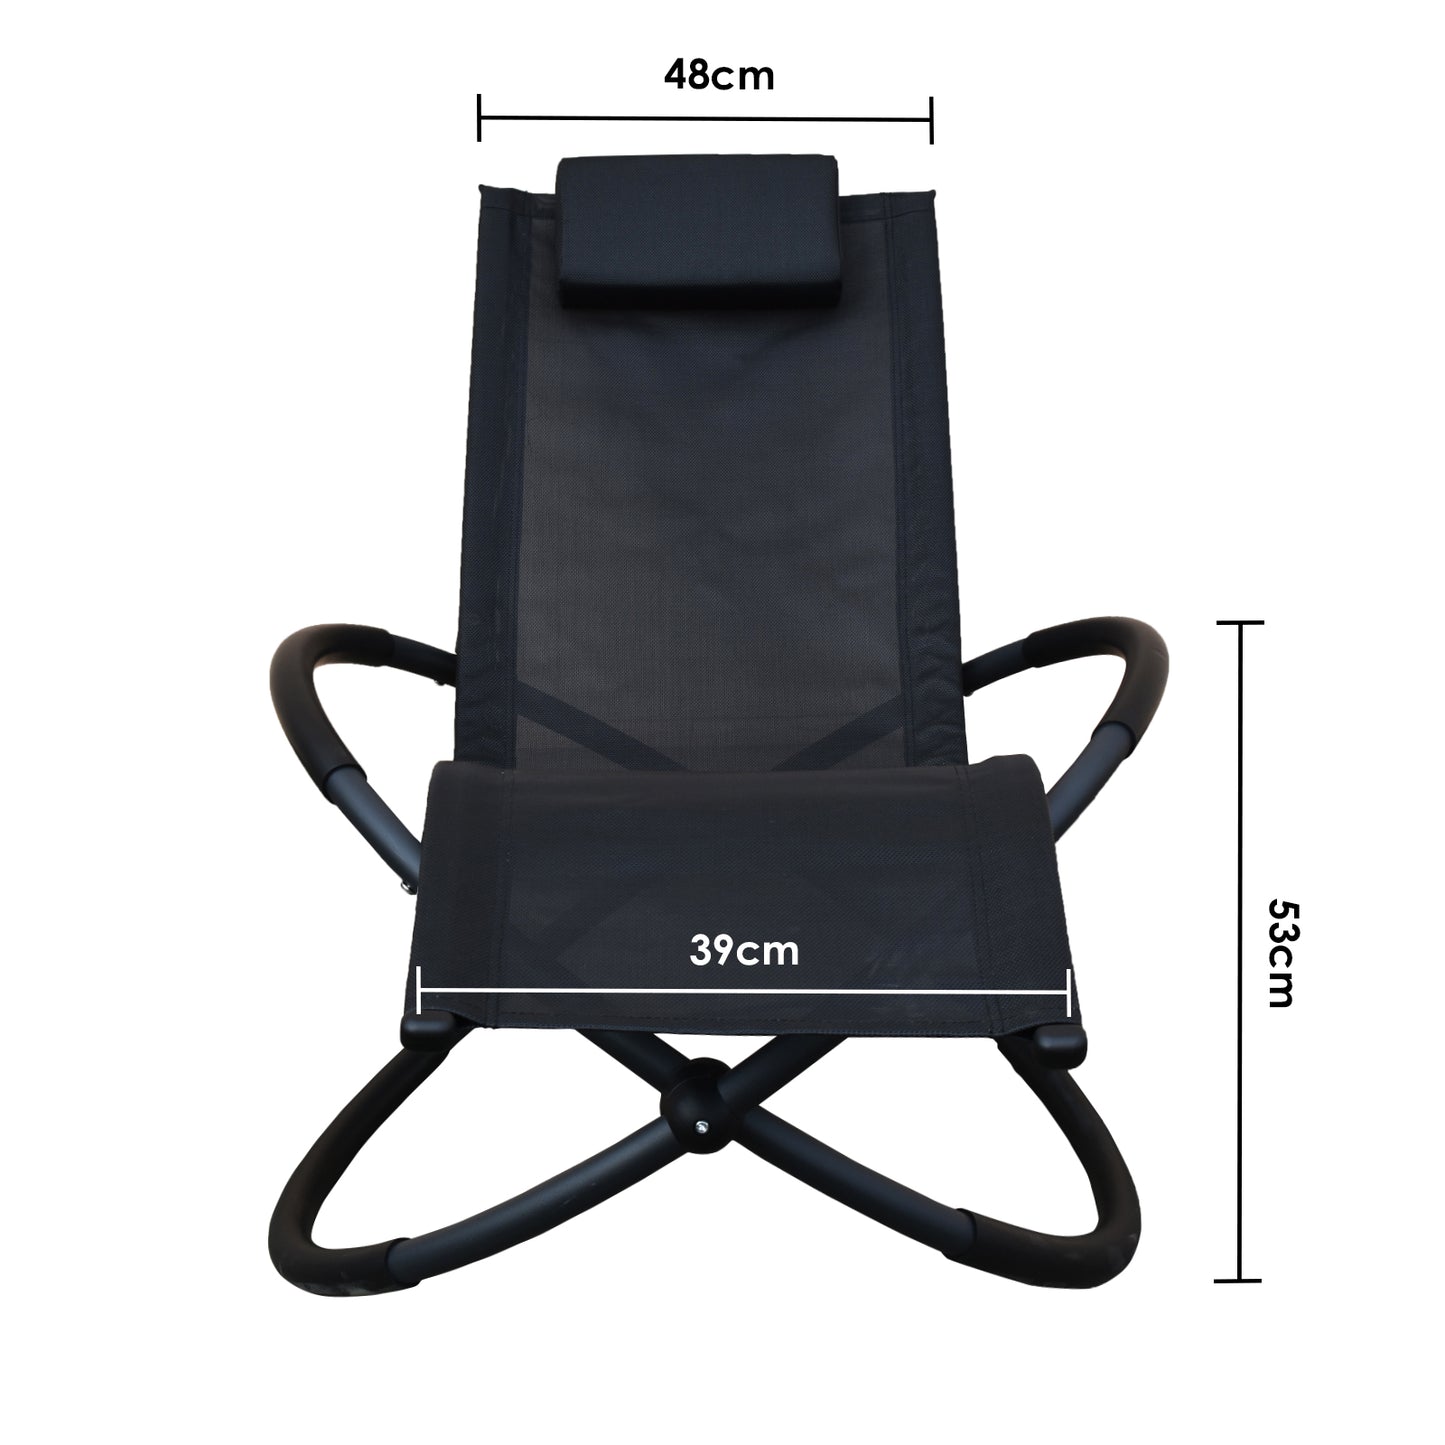 Wesson Zero Gravity Rocking Chair - Black